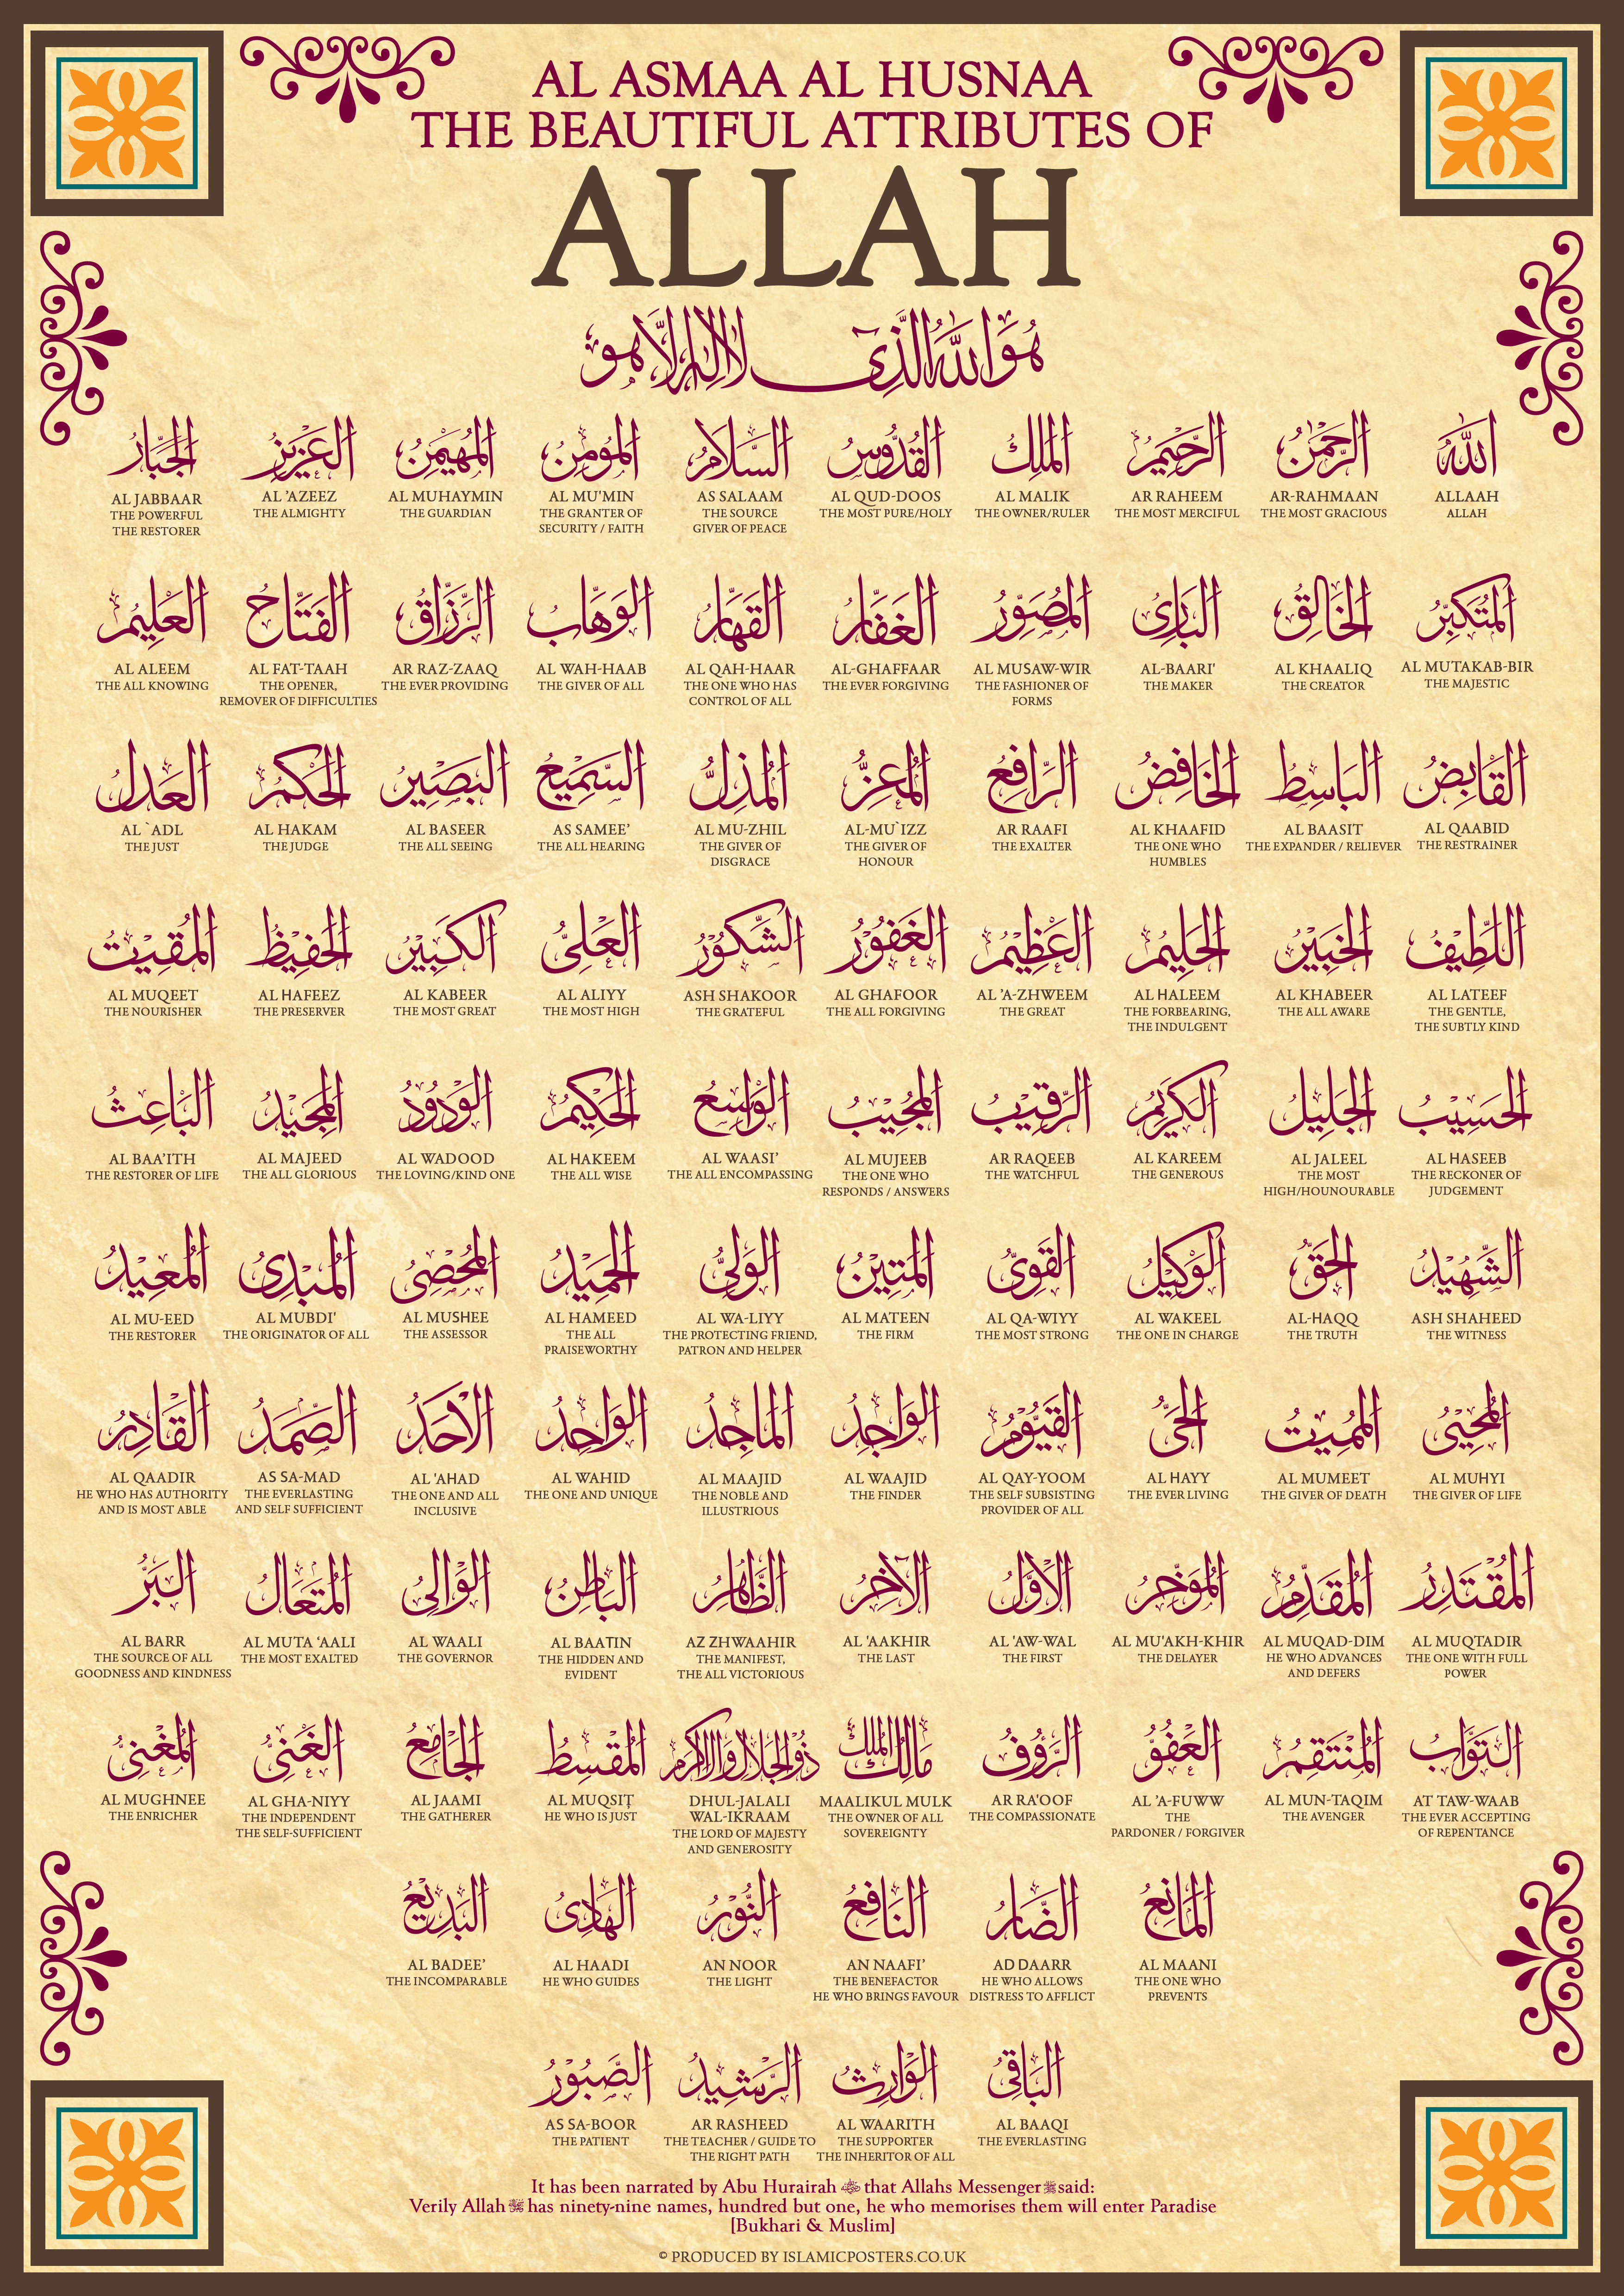 99 Names Of Allah Mp3 Download